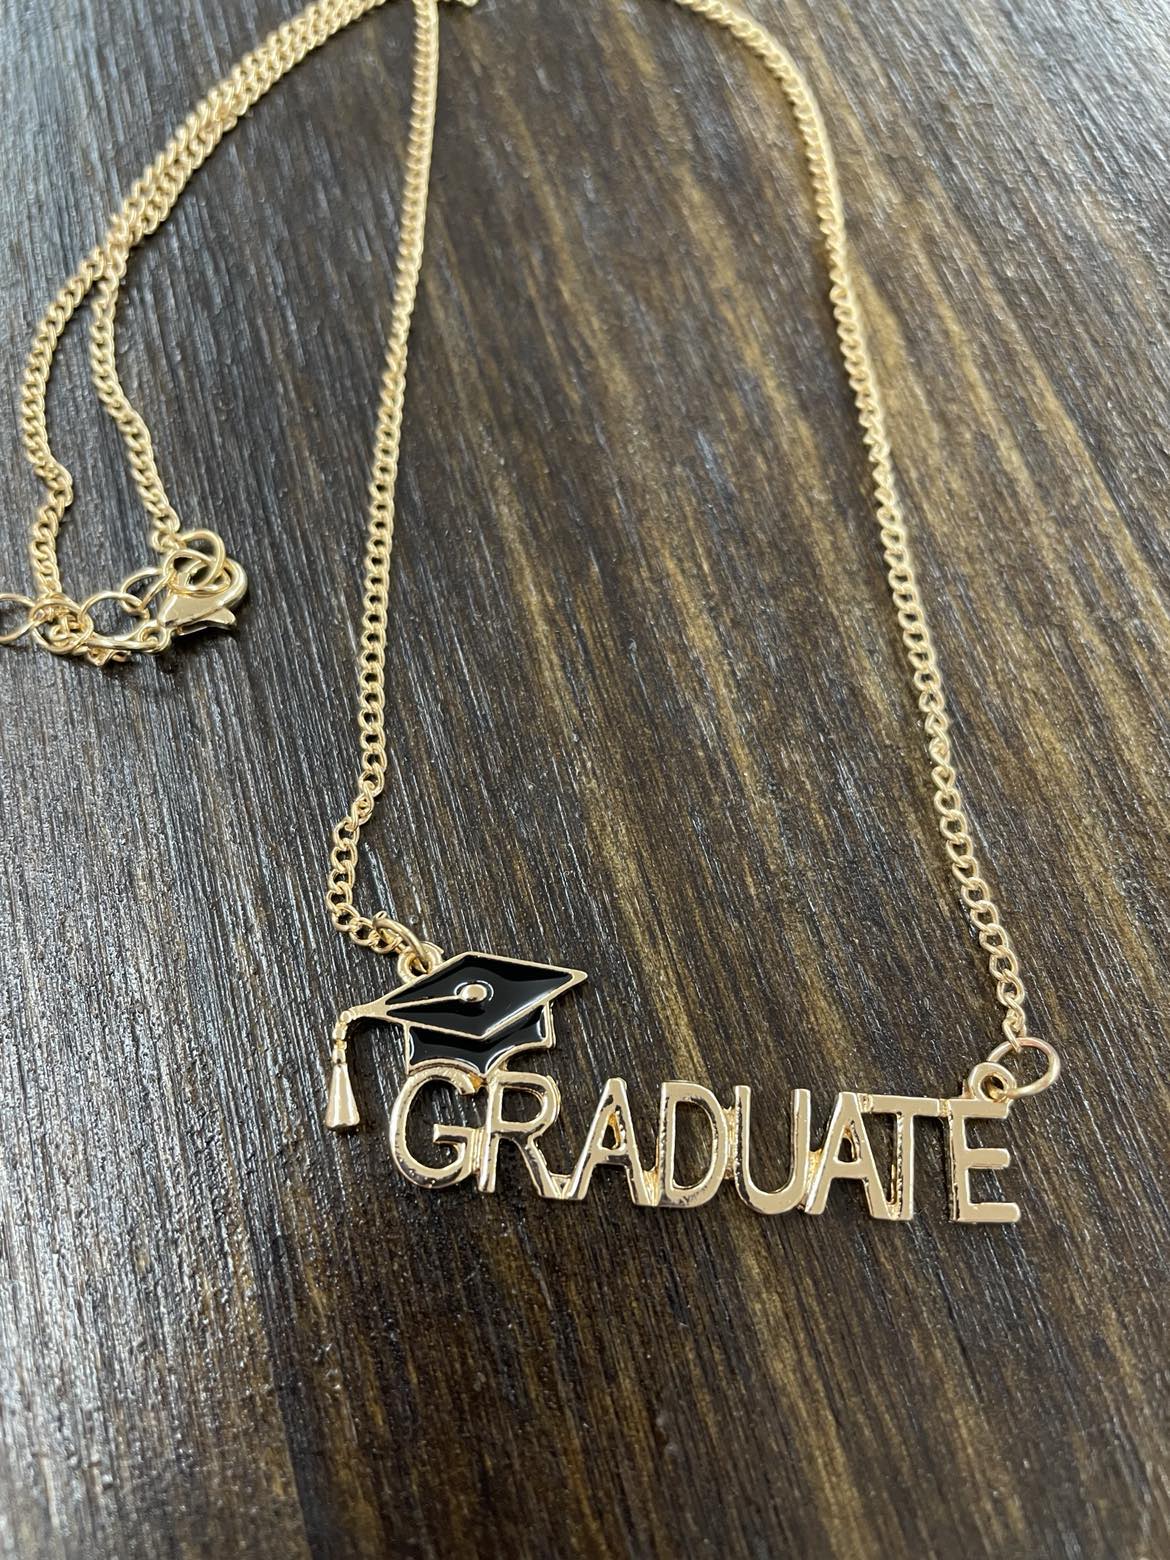 Gold Graduate Necklace